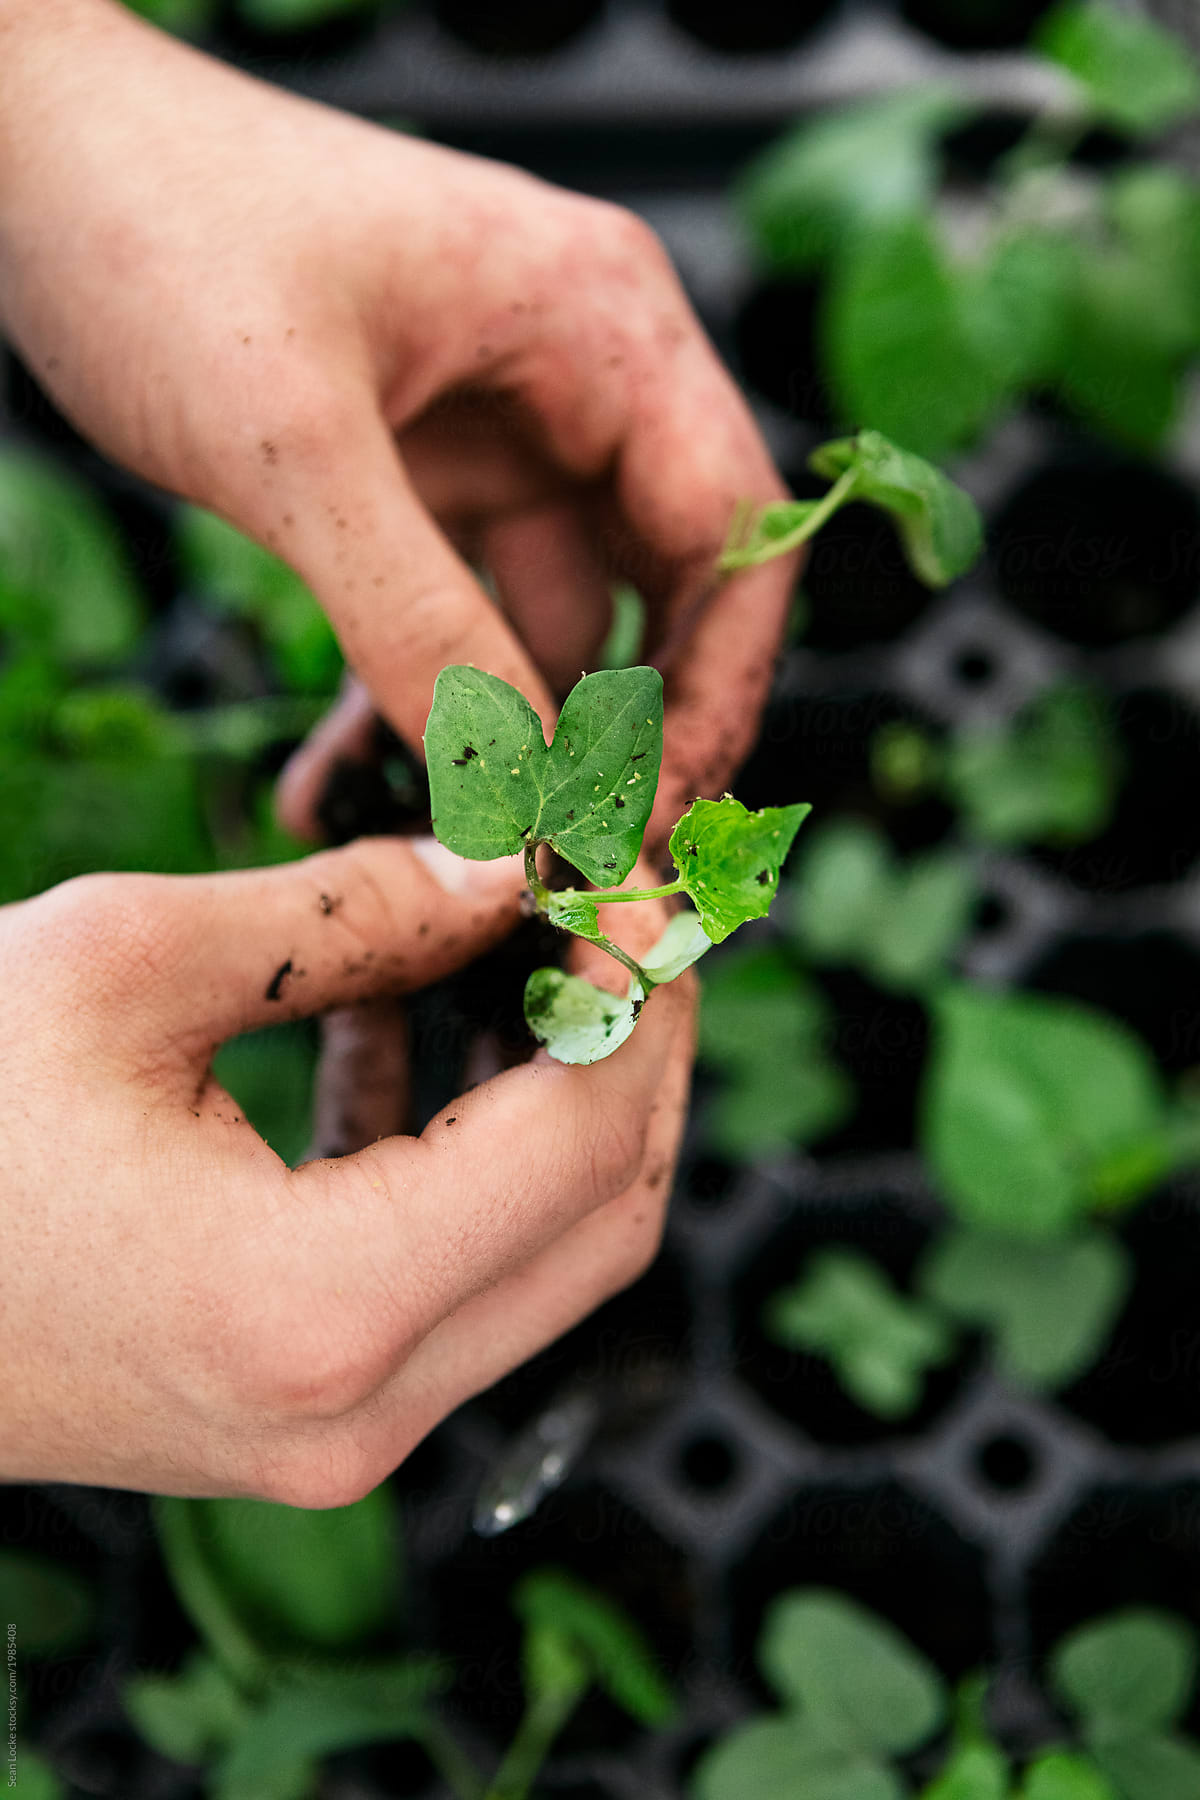 Gardening: Students Transplanting Seedlings